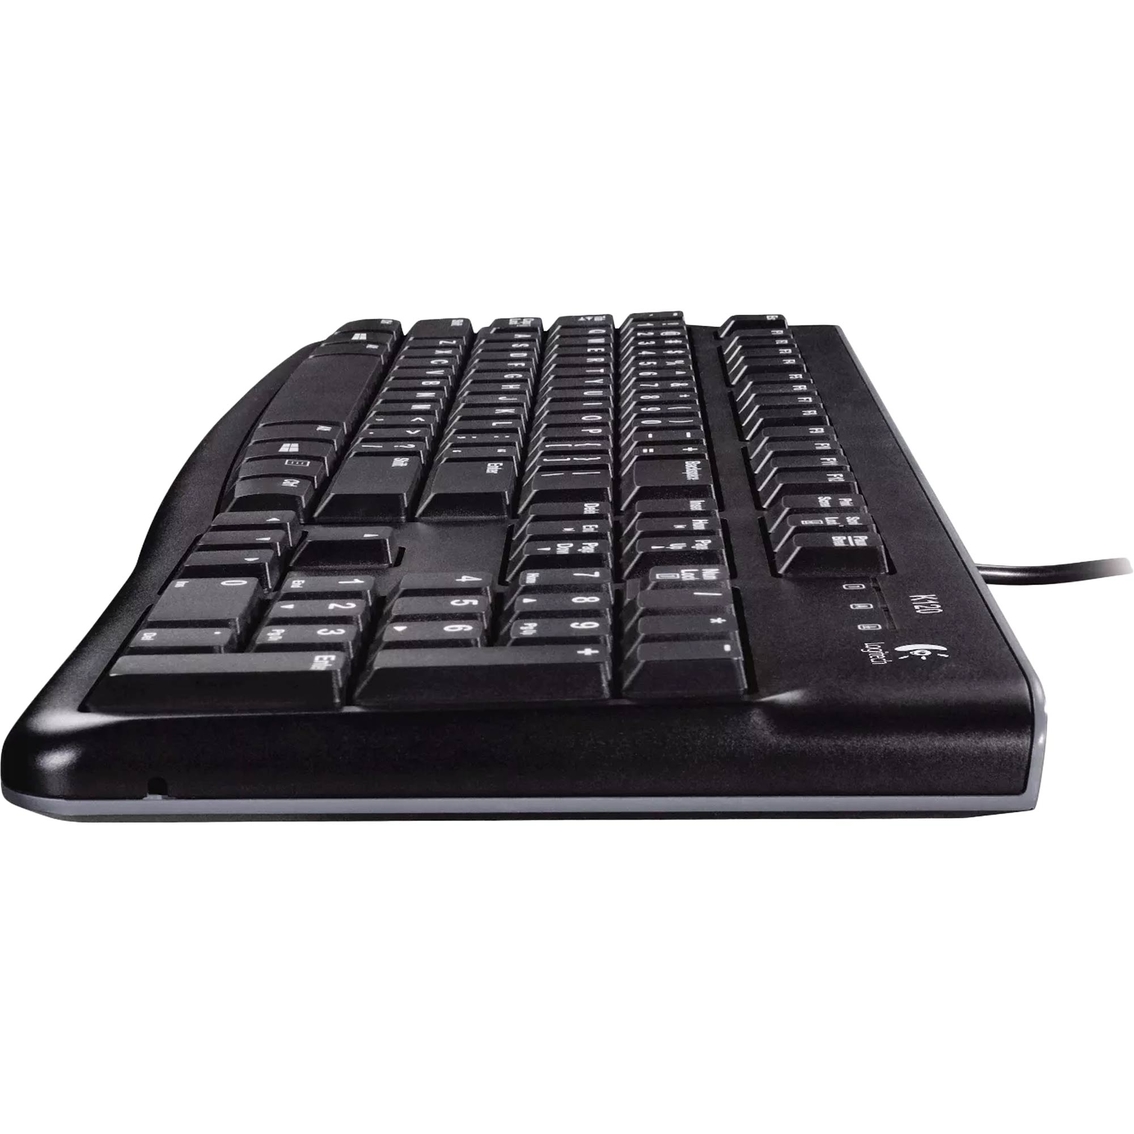 Logitech Keyboard K120 - Image 7 of 7